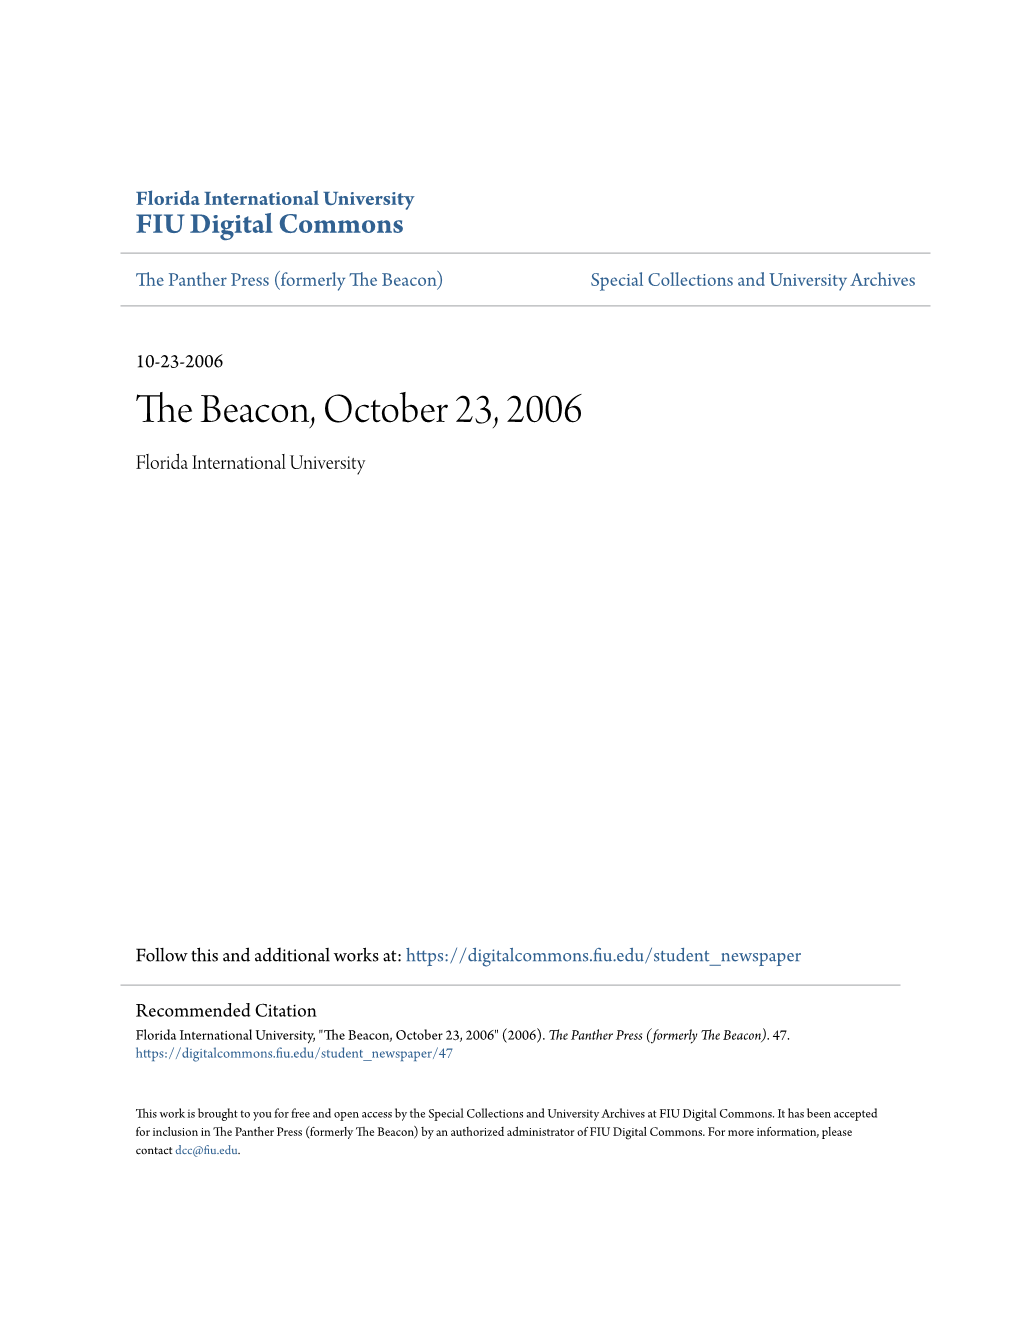 The Beacon, October 23, 2006 Florida International University